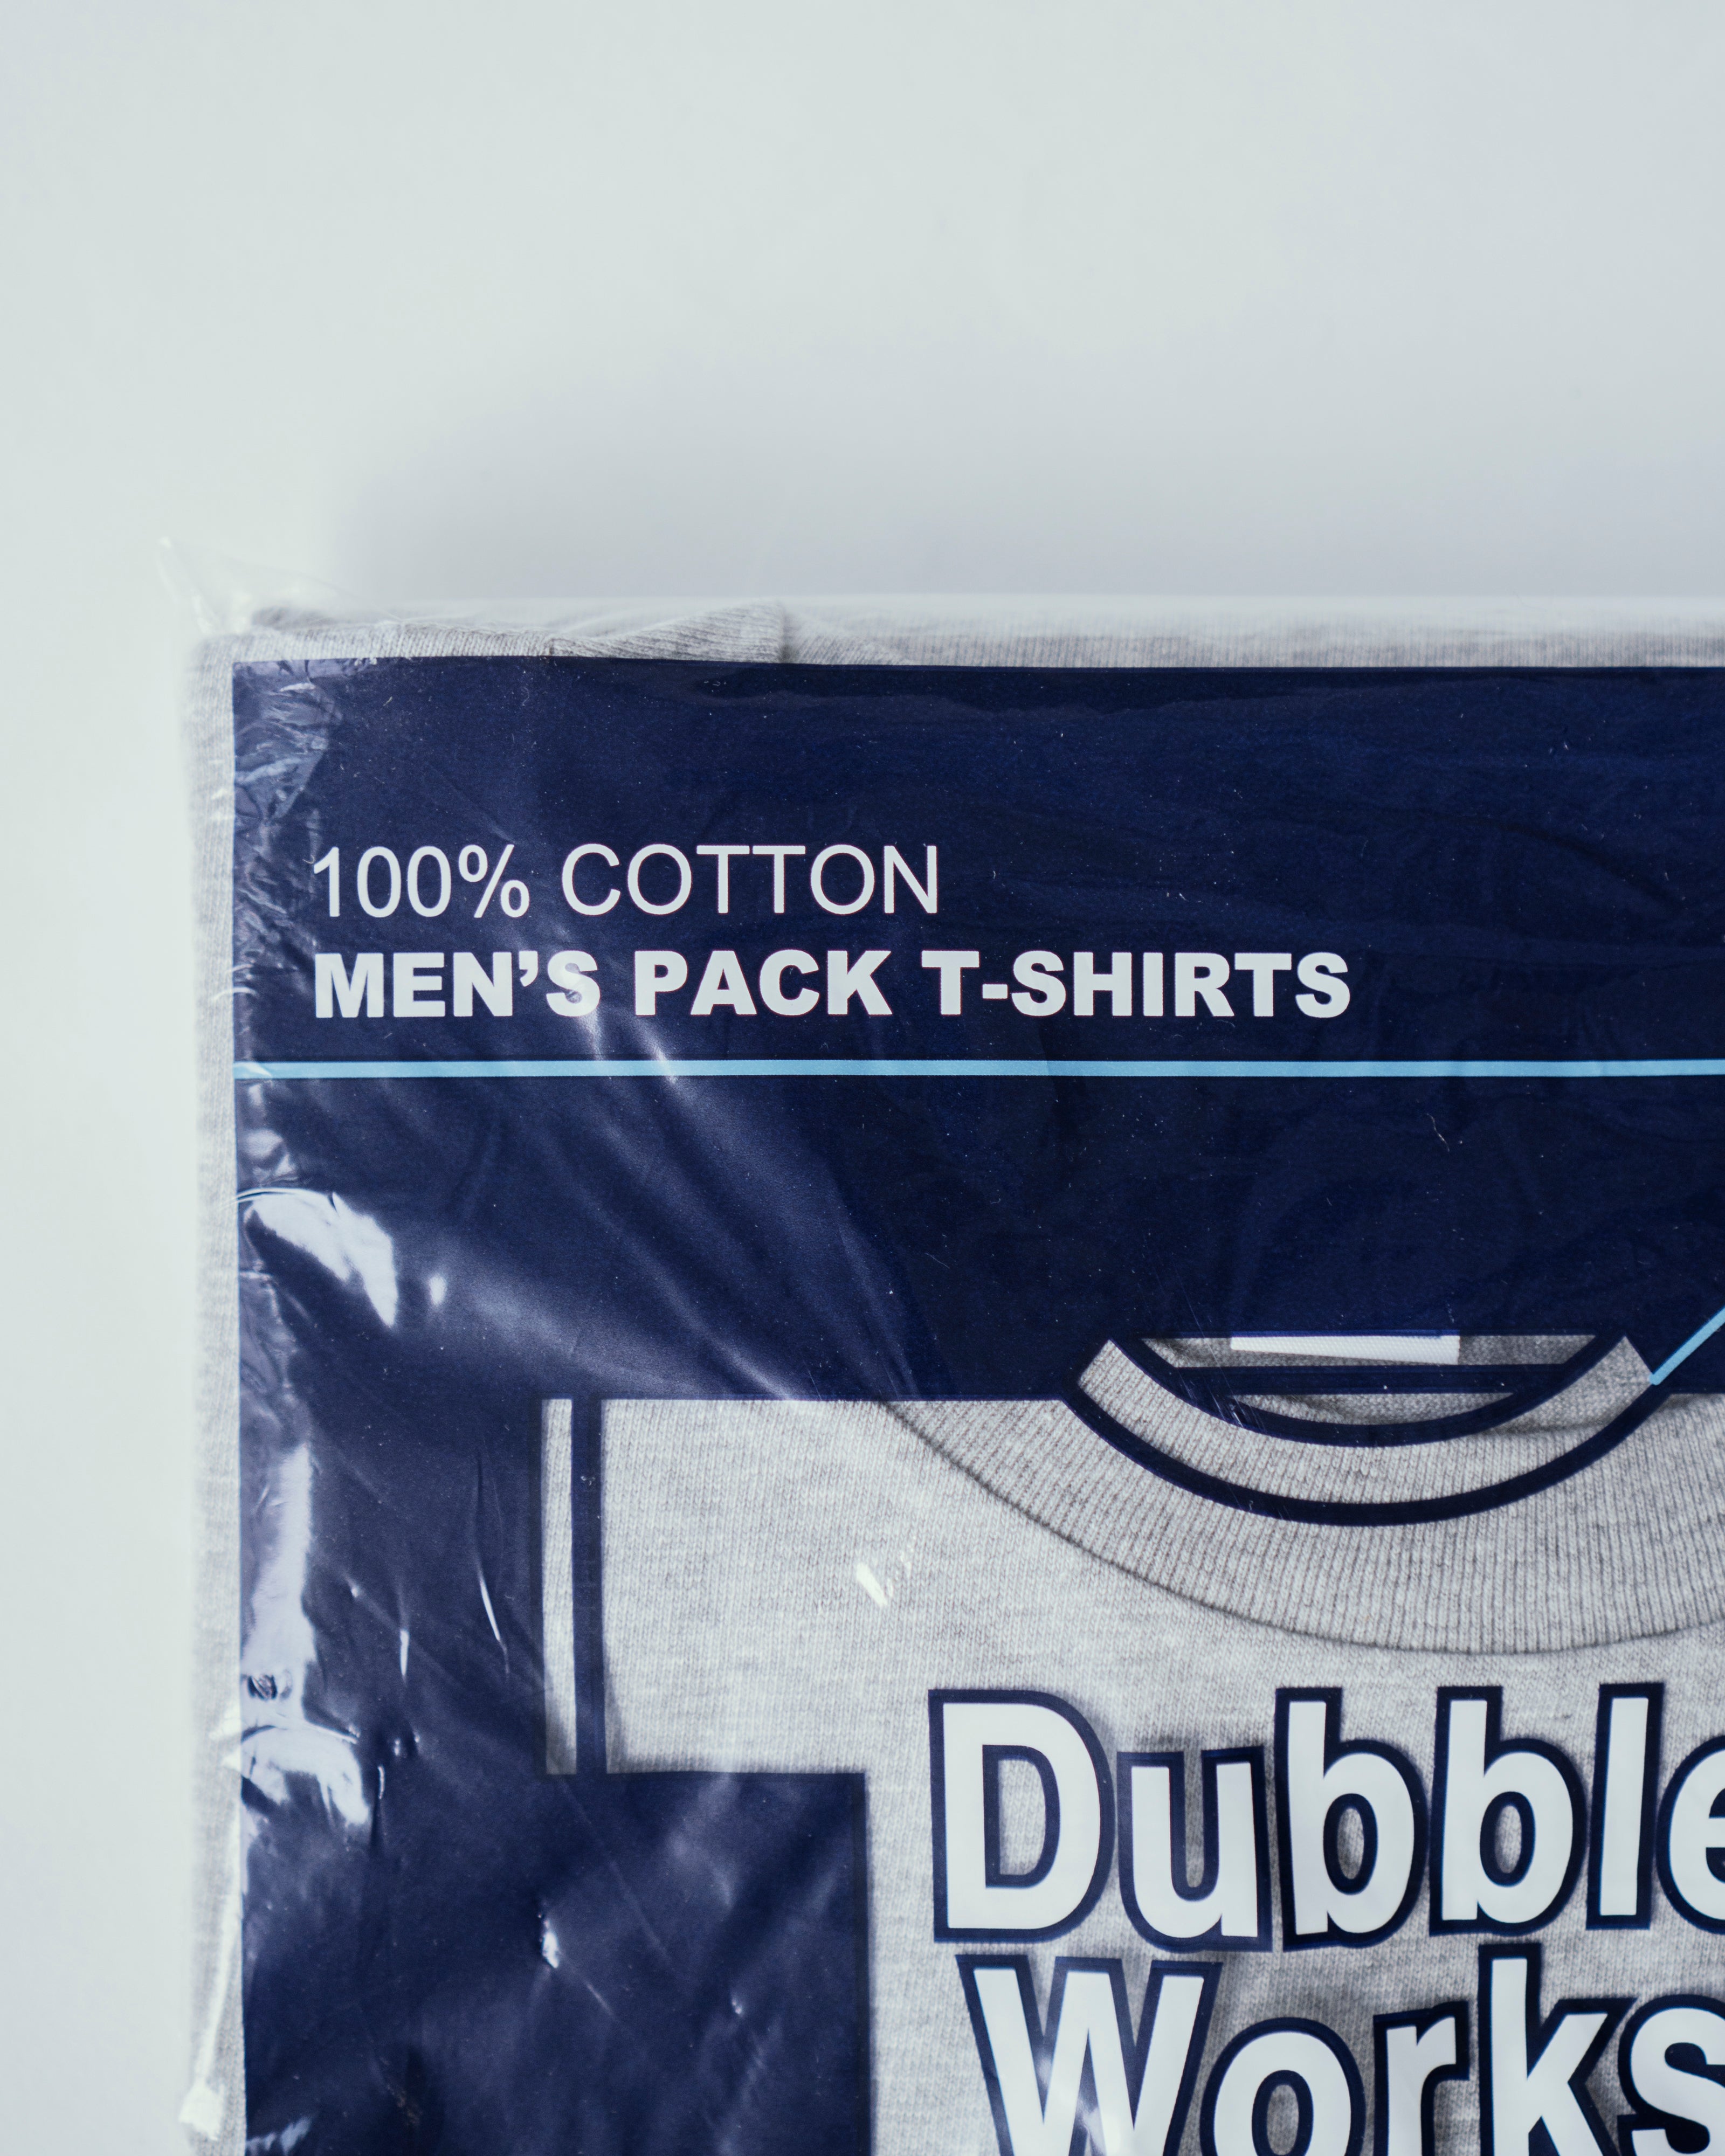 Men's T-shirt  - Crew Neck 2 Pack Tee (Dubbleworks)